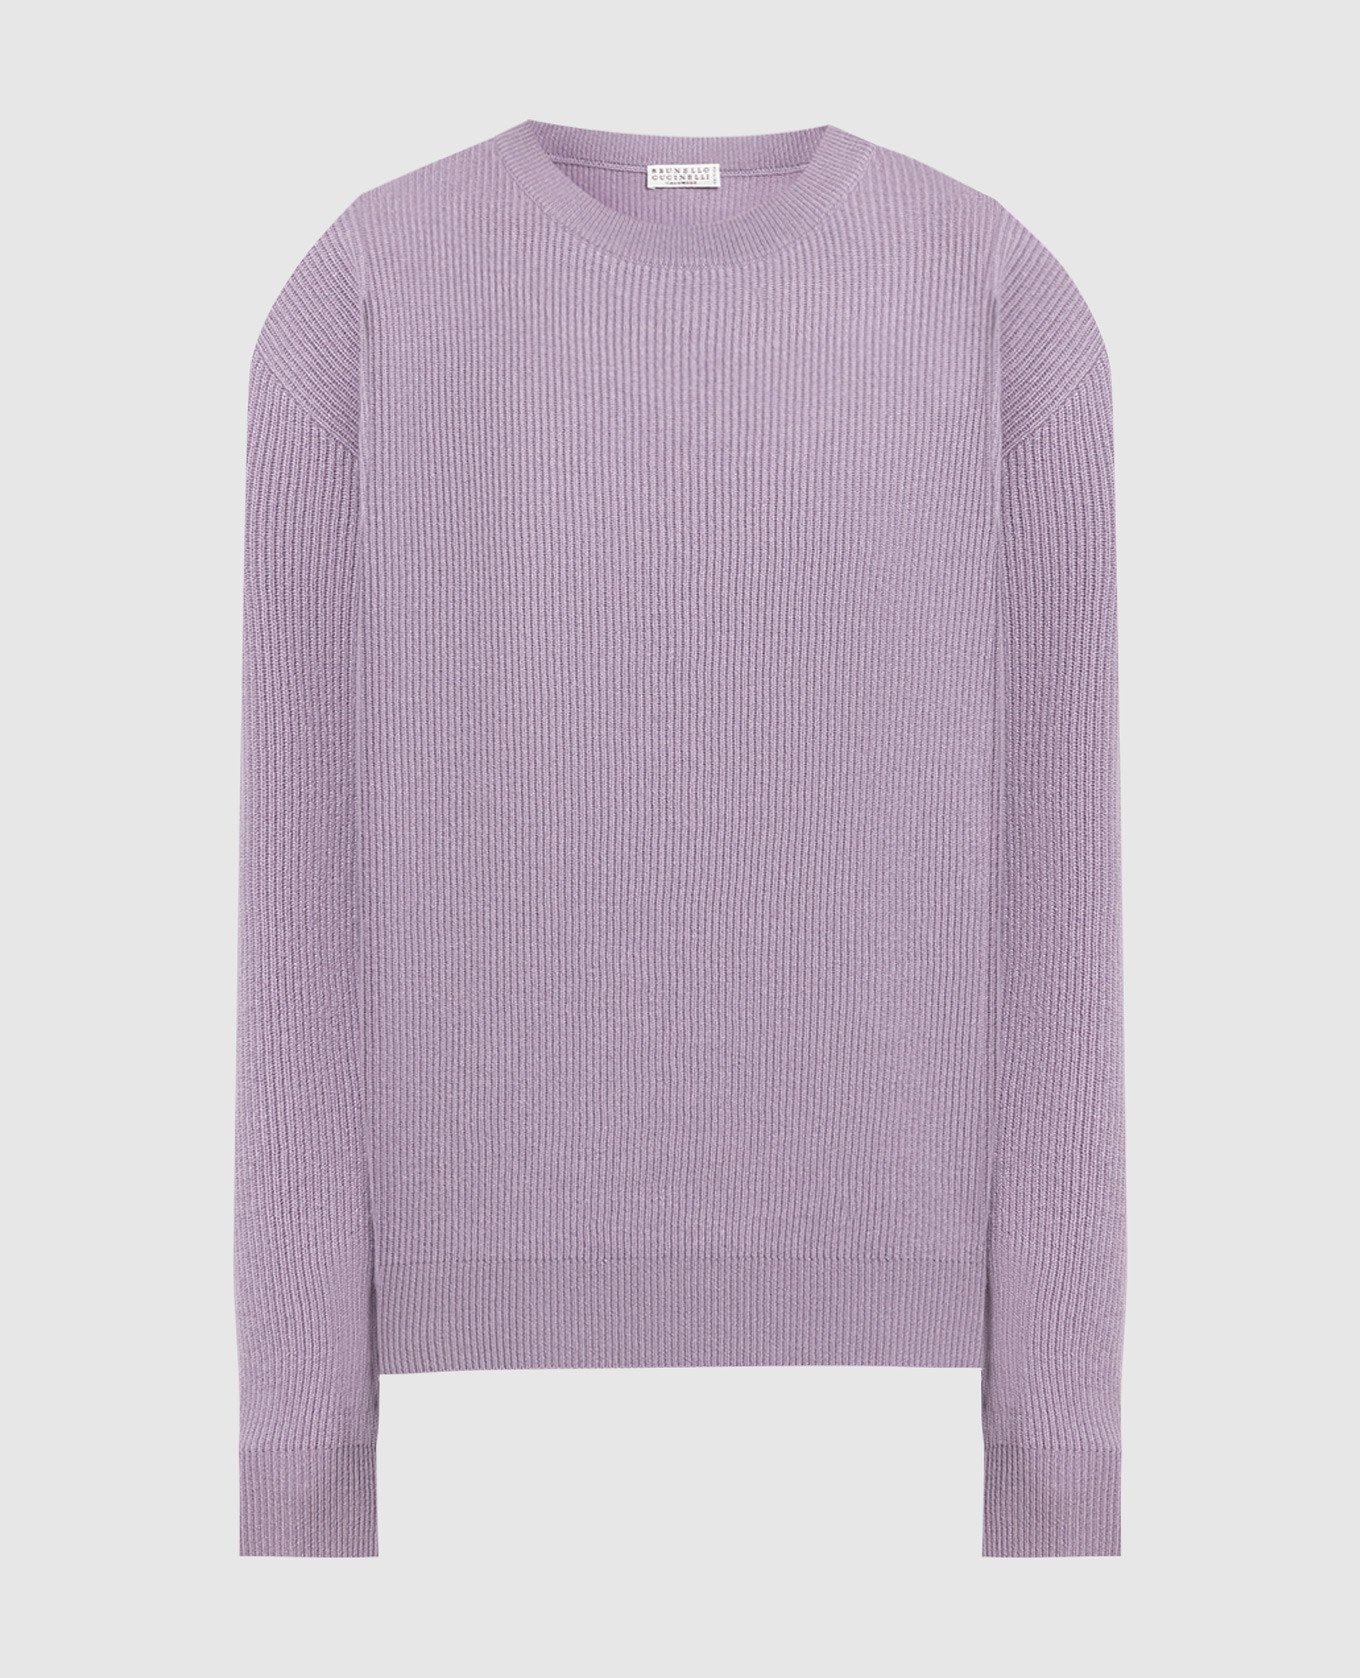 Purple cashmere sweater with monil chain